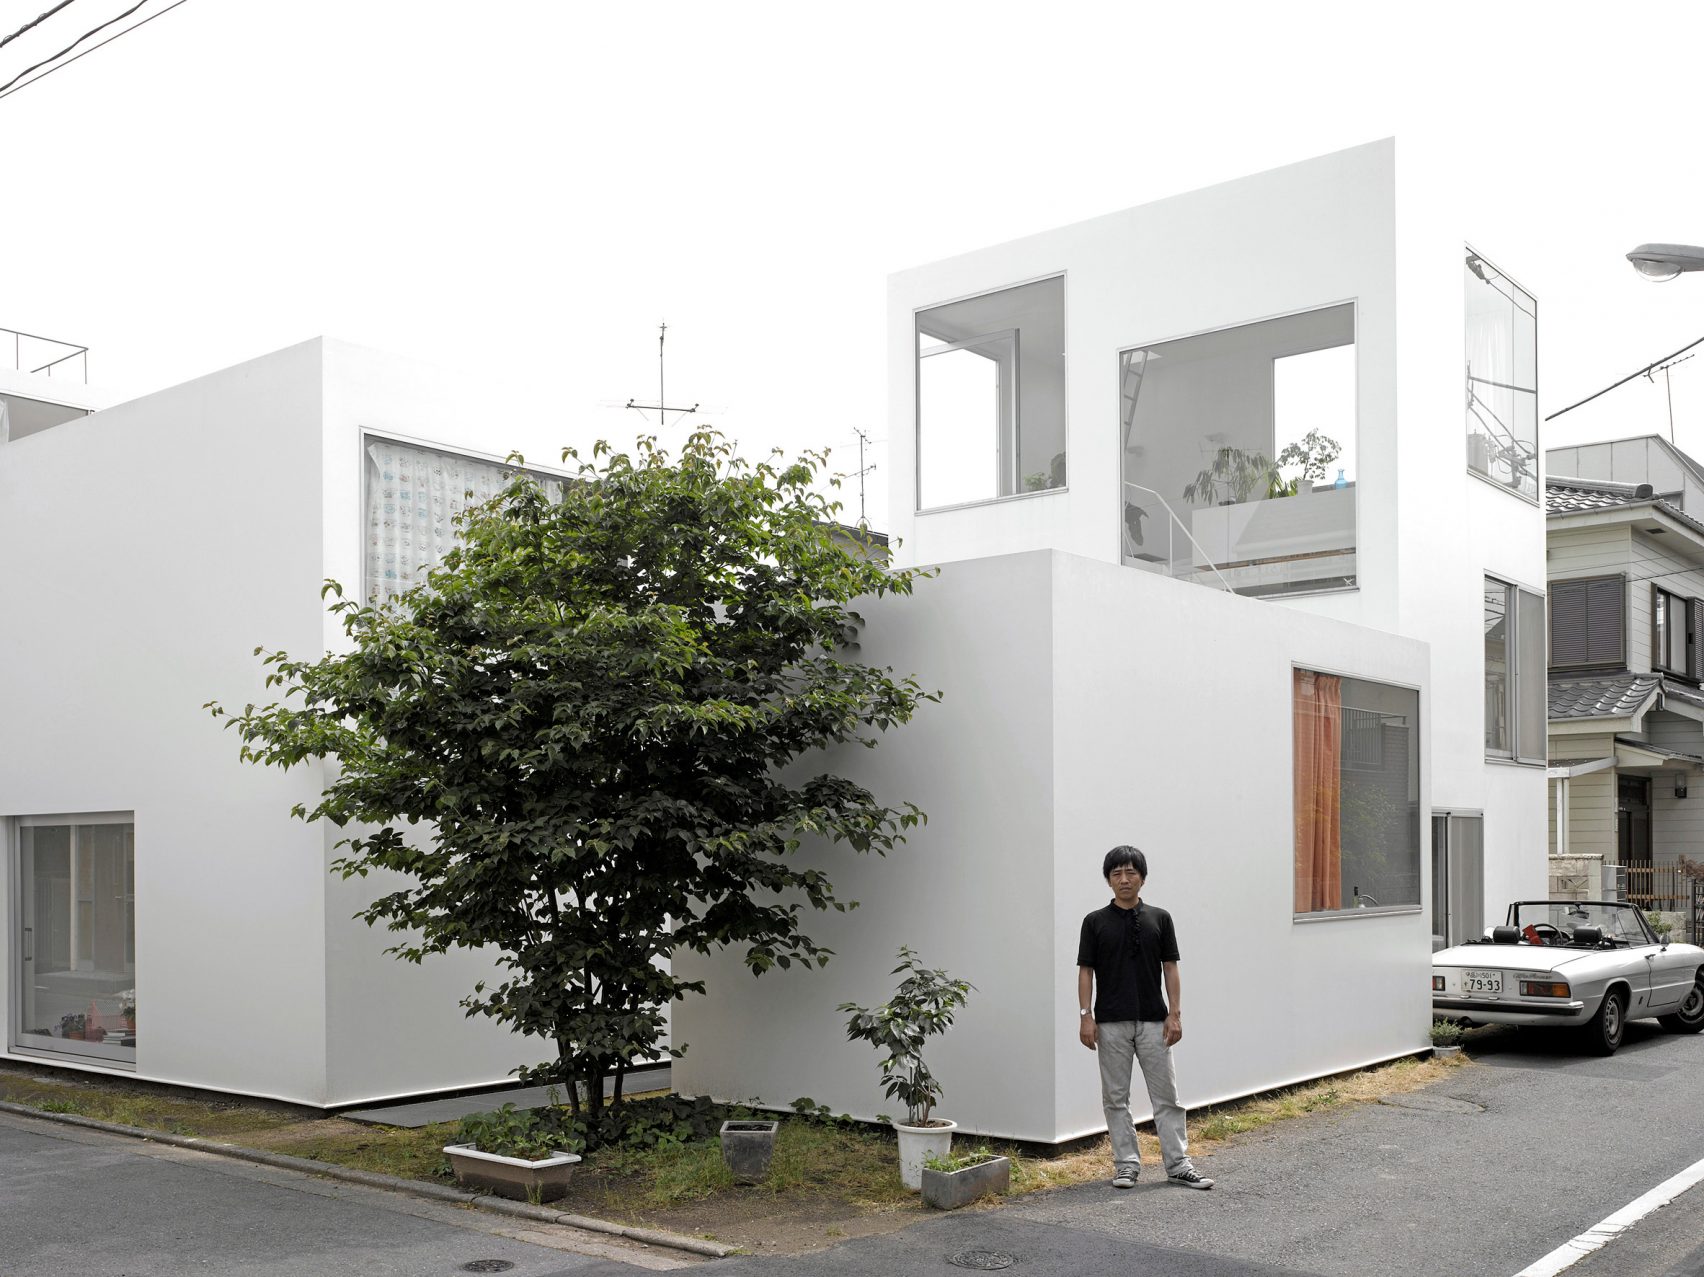 moriyama-house-photos-edmund-sumner-architecture-photography-residential-japan_dezeen_2364_col_0-1704x1277